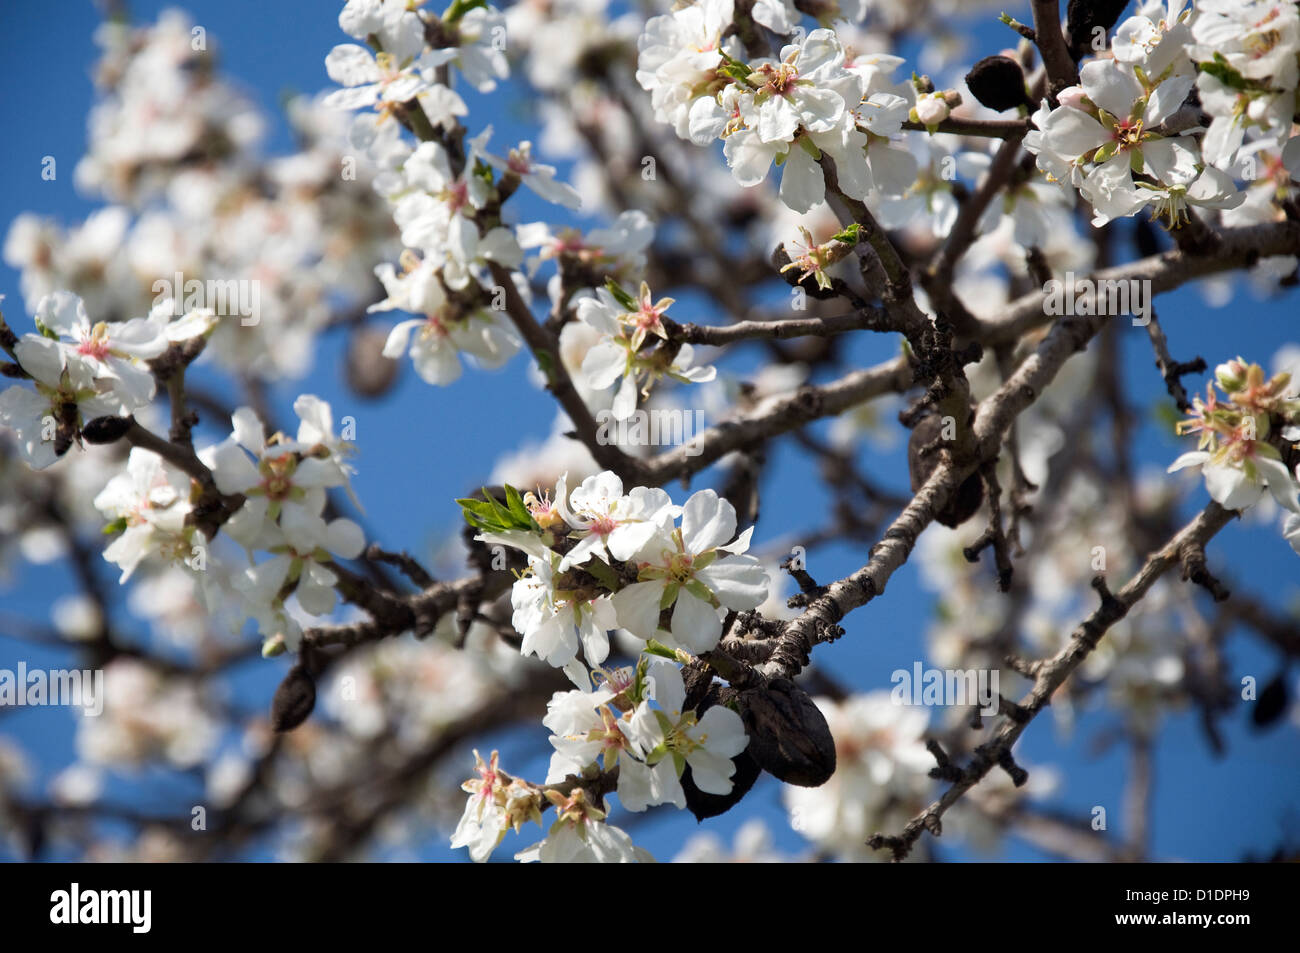 Almond blossoms (Prunus dulcis) against blue sky Stock Photo